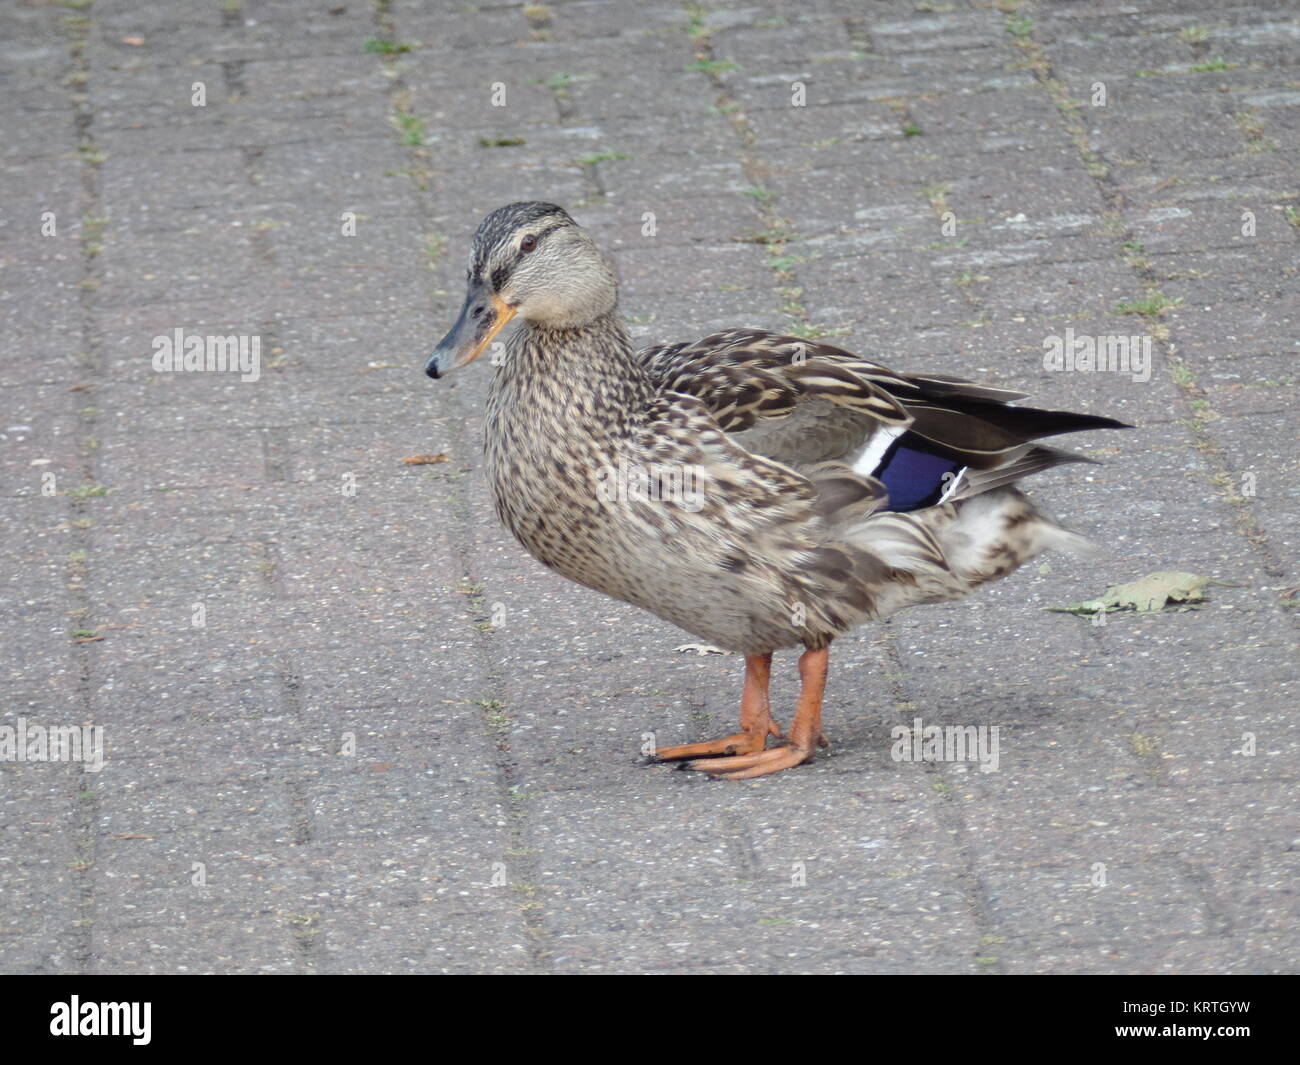 Duck on the street. Stock Photo